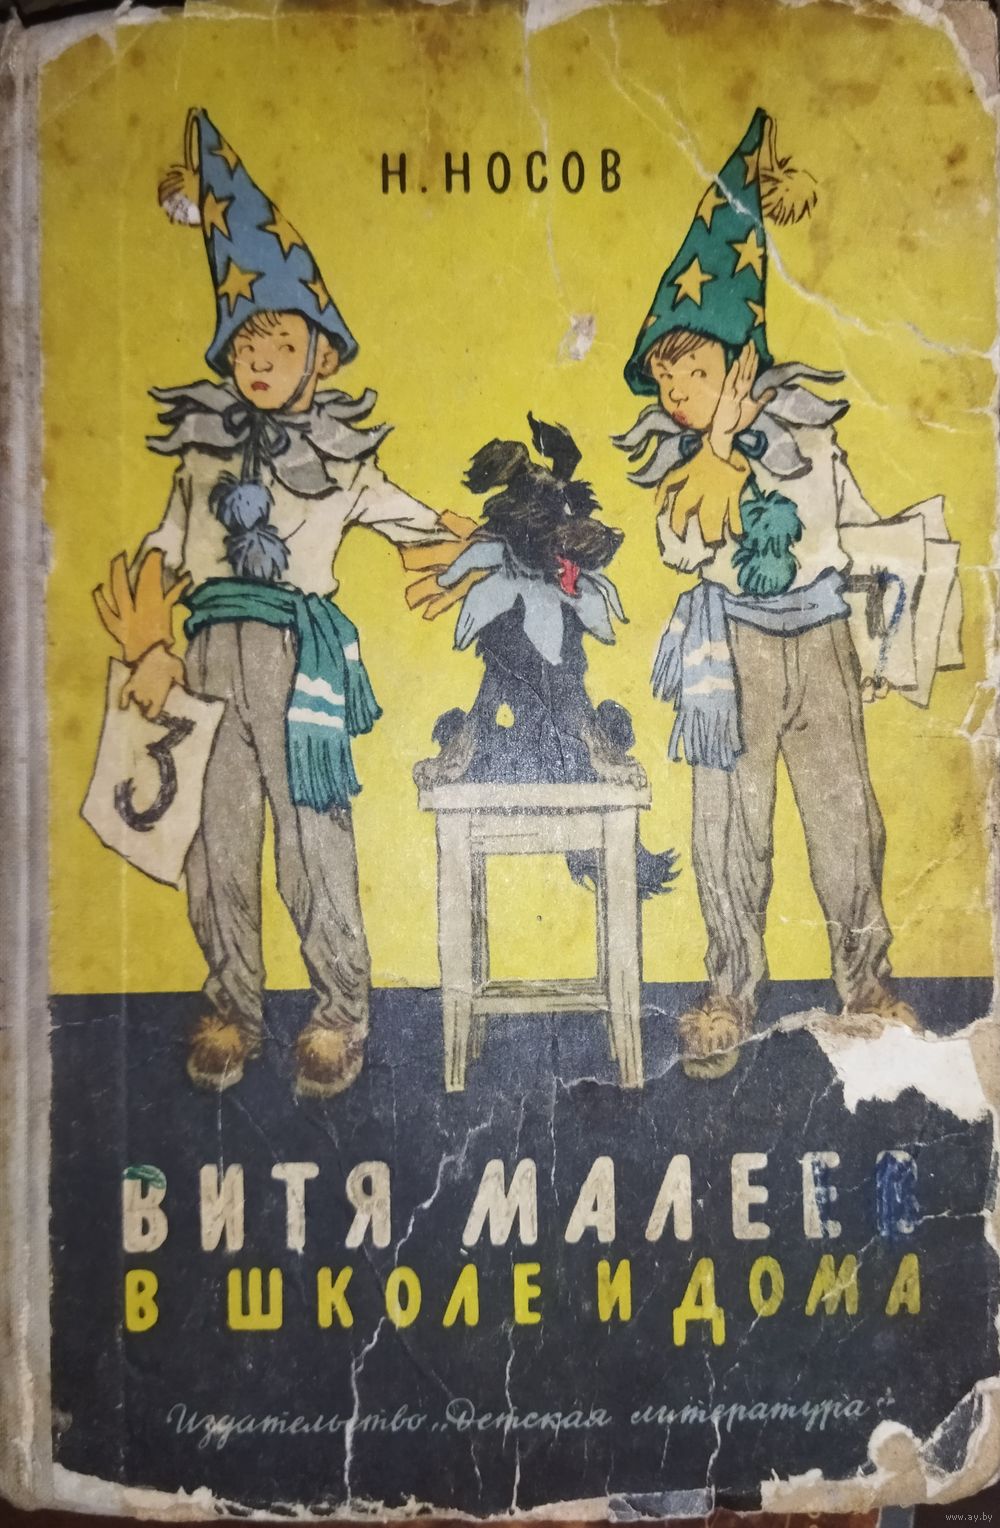 Витя Малеев в школе и дома СССР книга